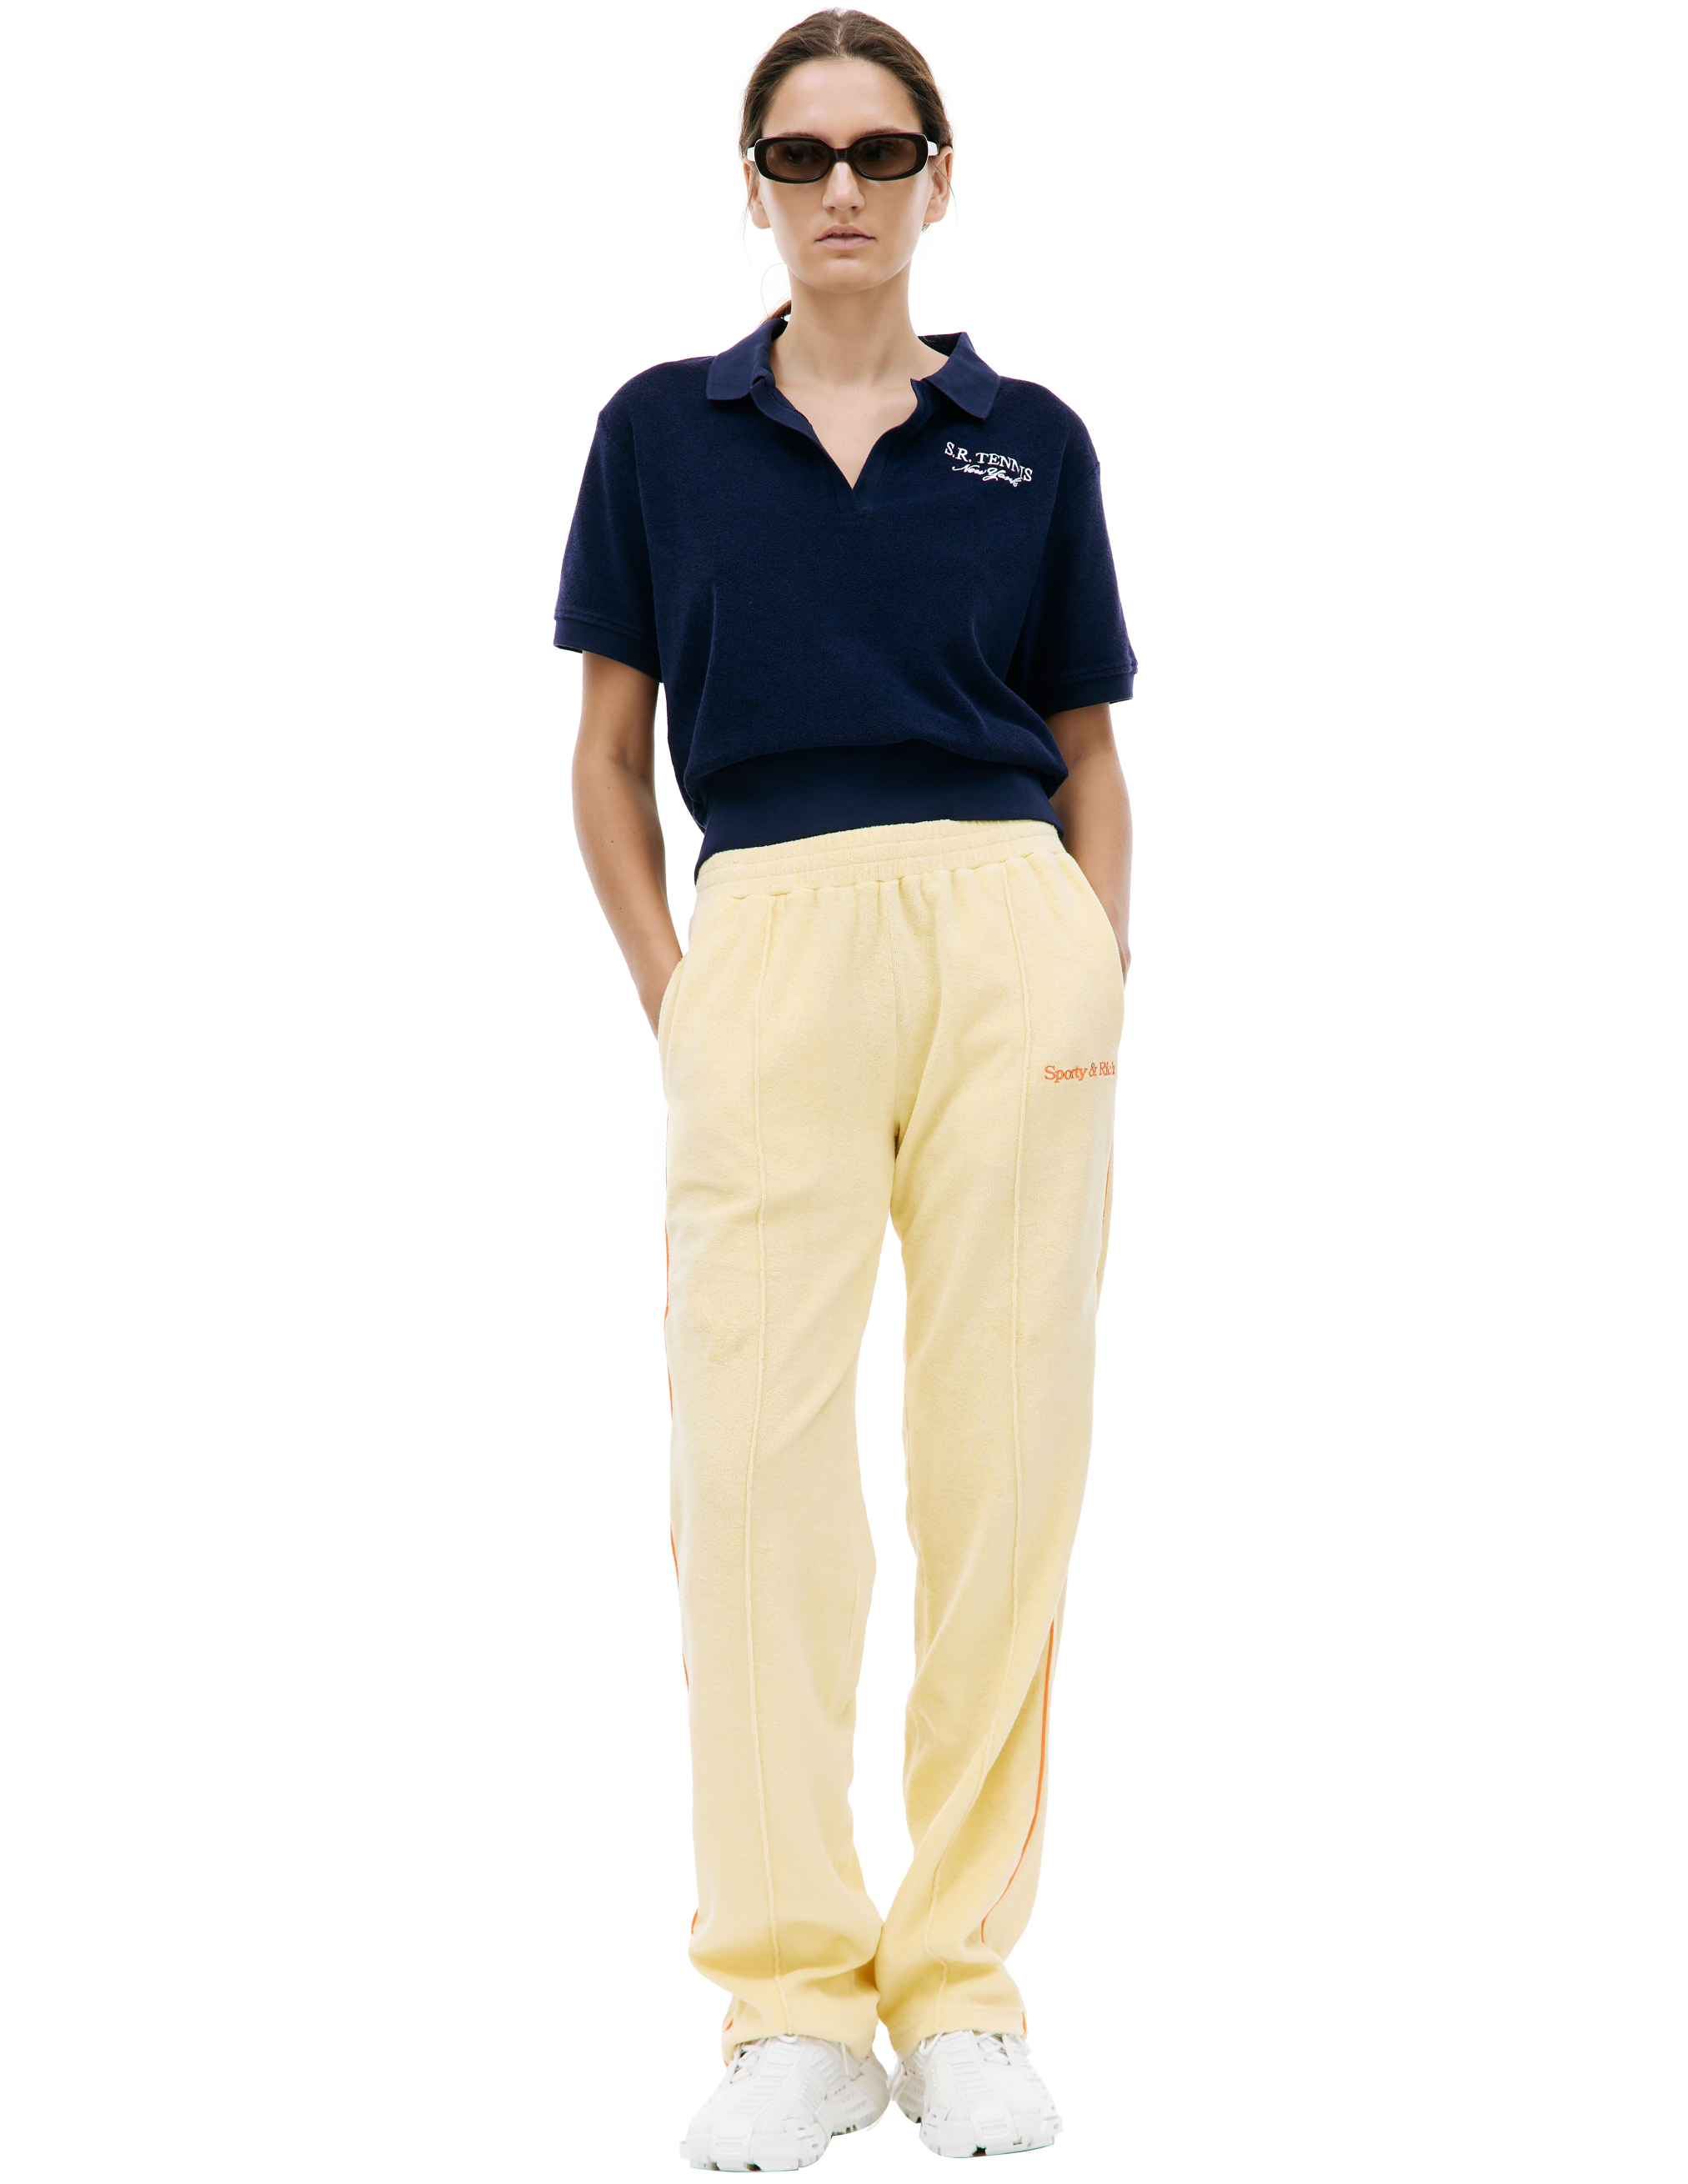 Спортивные брюки с лампасами SPORTY & RICH PA921AL, размер S;M;L;XL